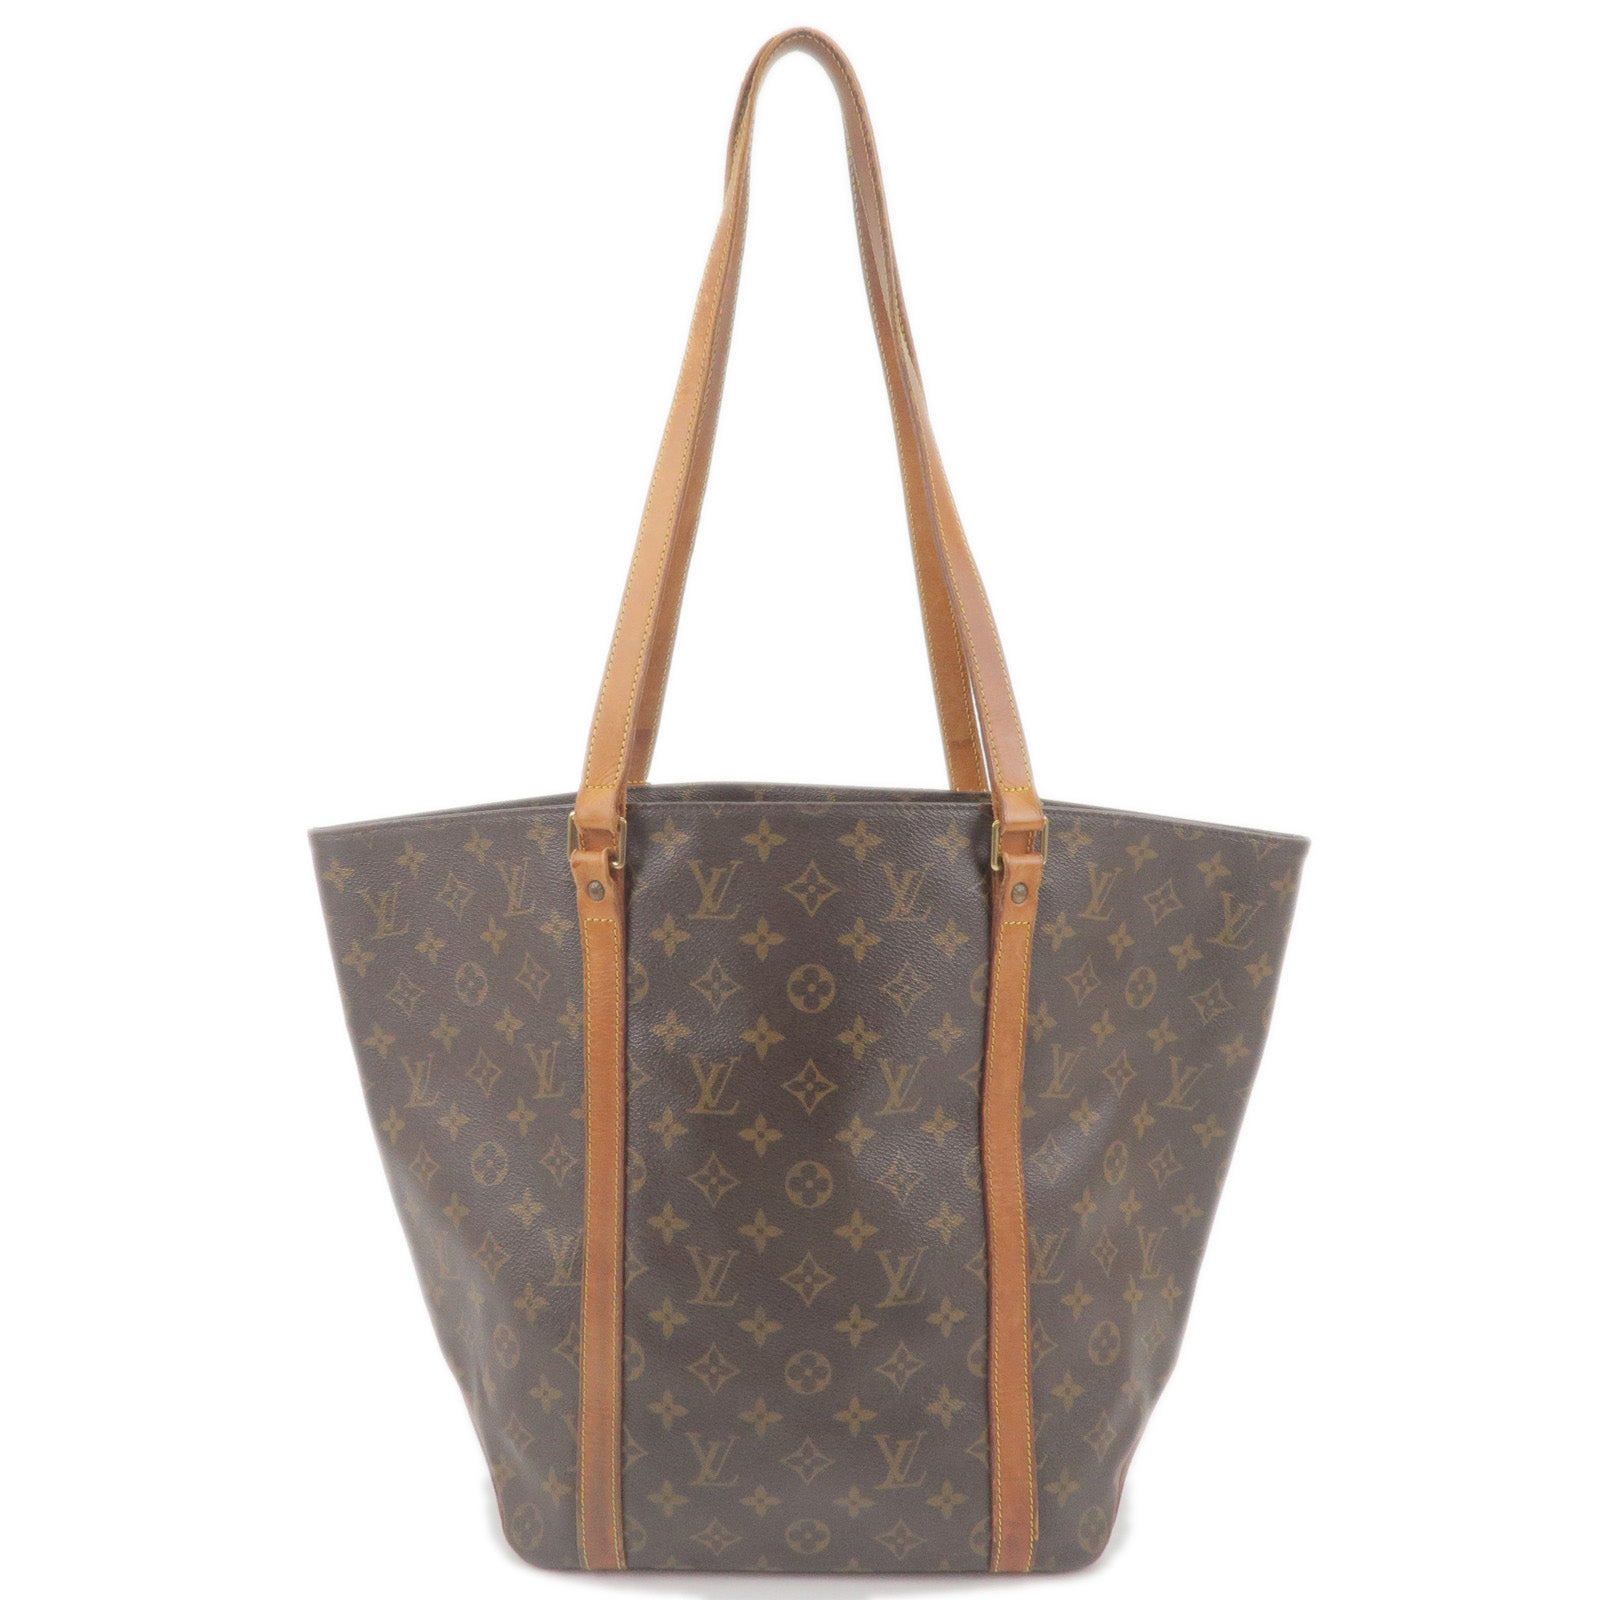 Louis Vuitton Sac Plat shopping bag in ebene damier canvas and brown